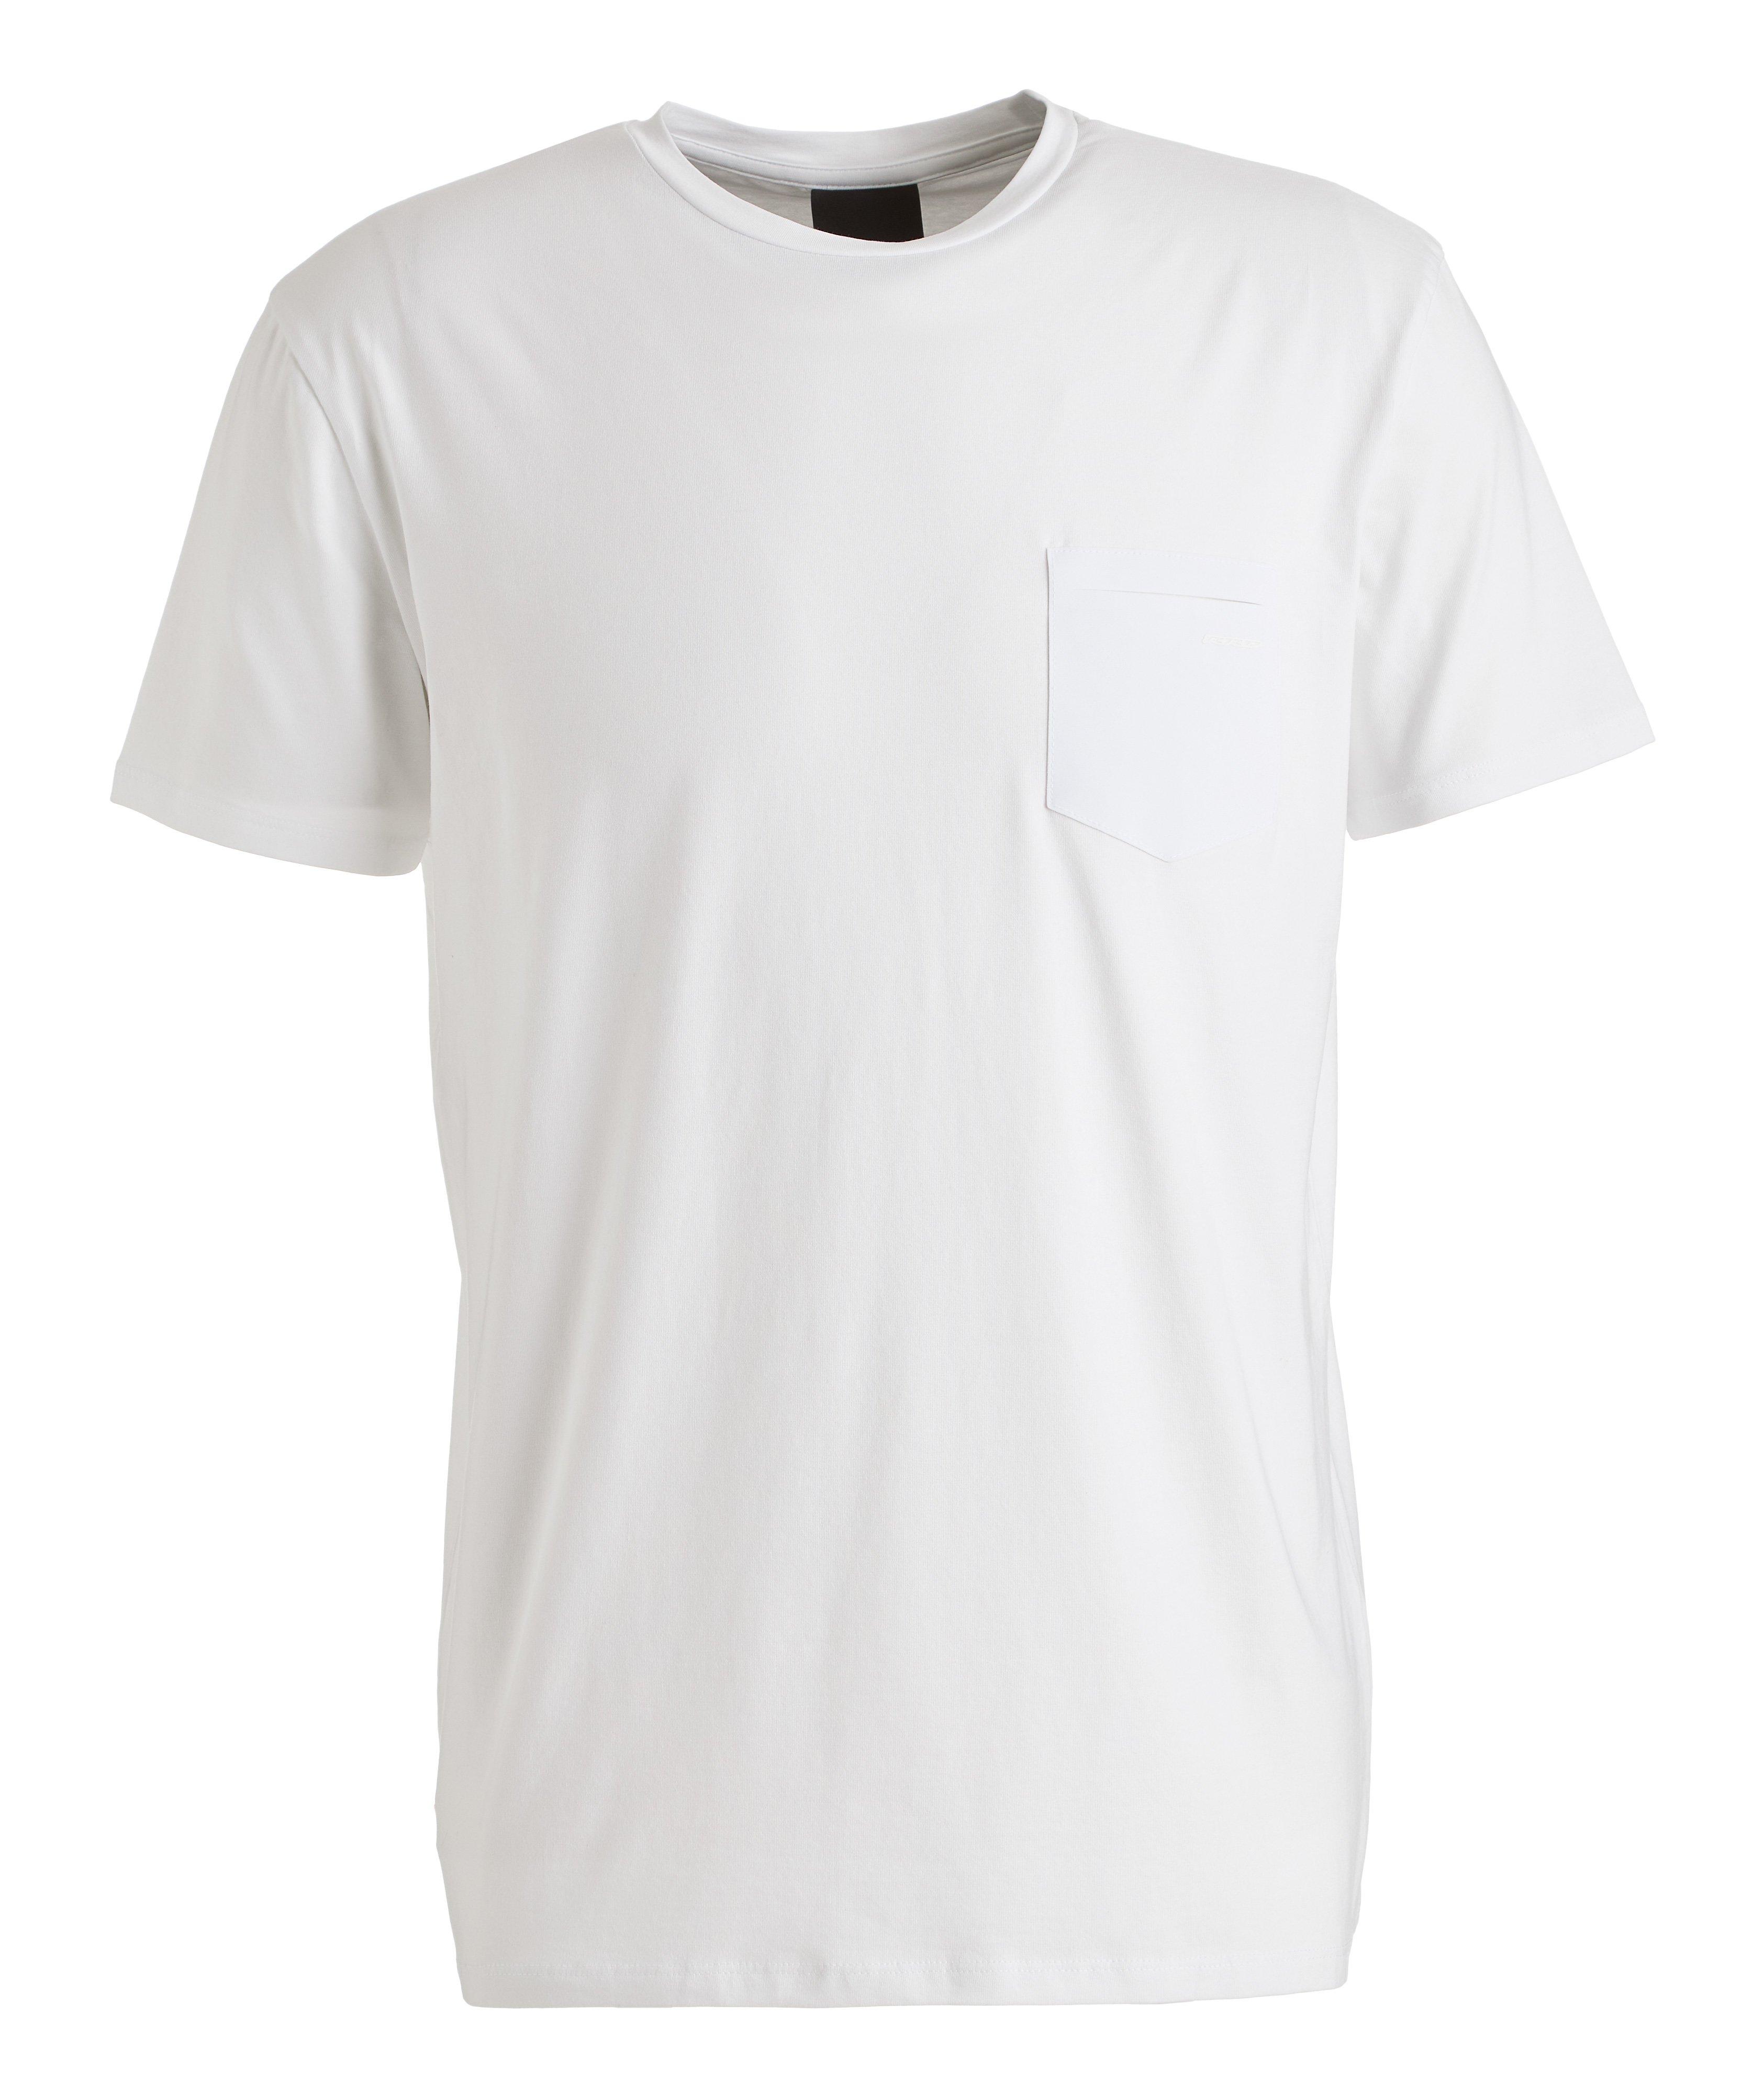 T-shirt en tissu performance extensible image 0